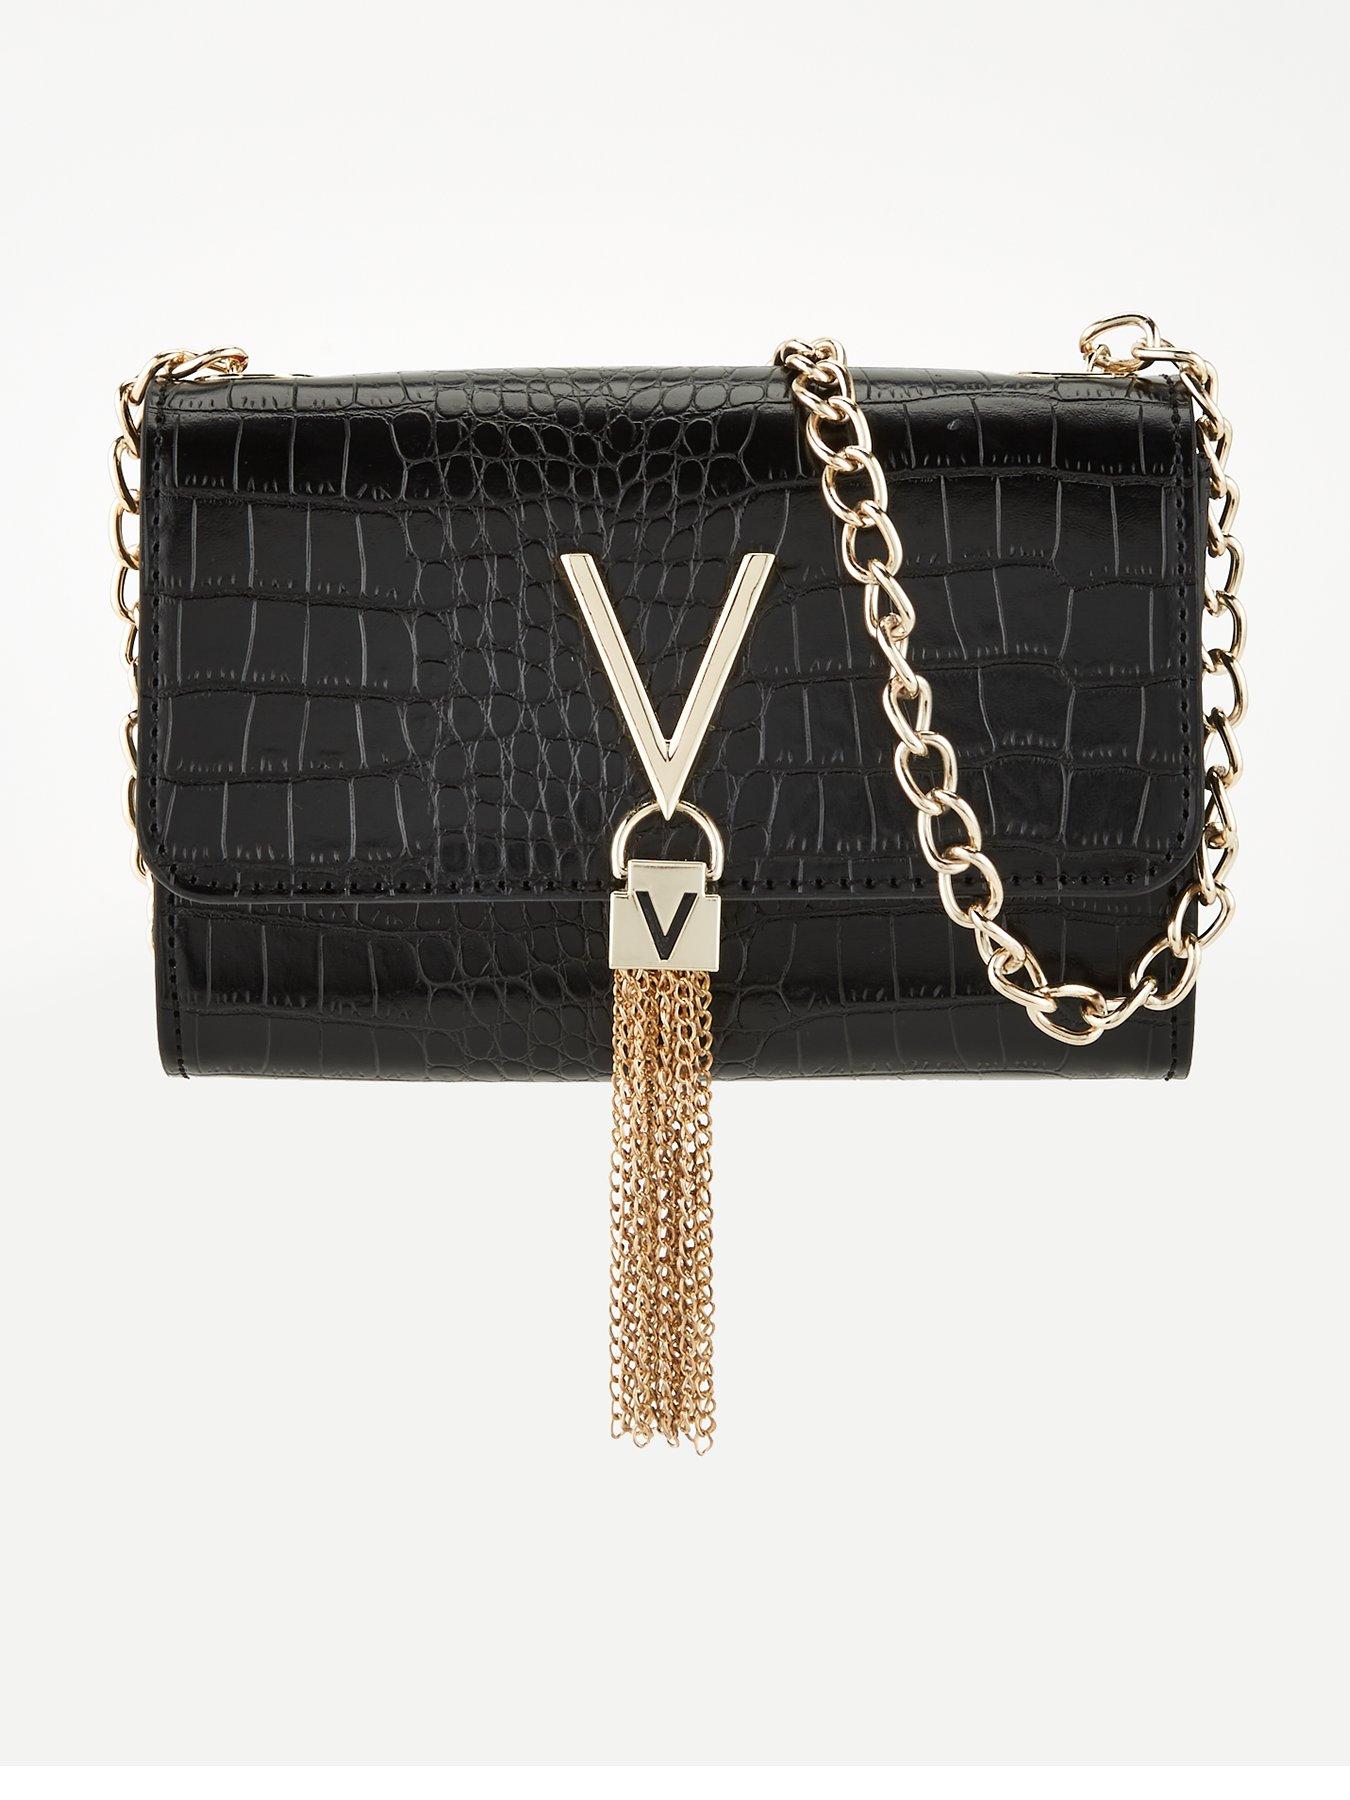 Valentino Divina Nero Satchel Bag Accessories: One-Size, Colour: Bke